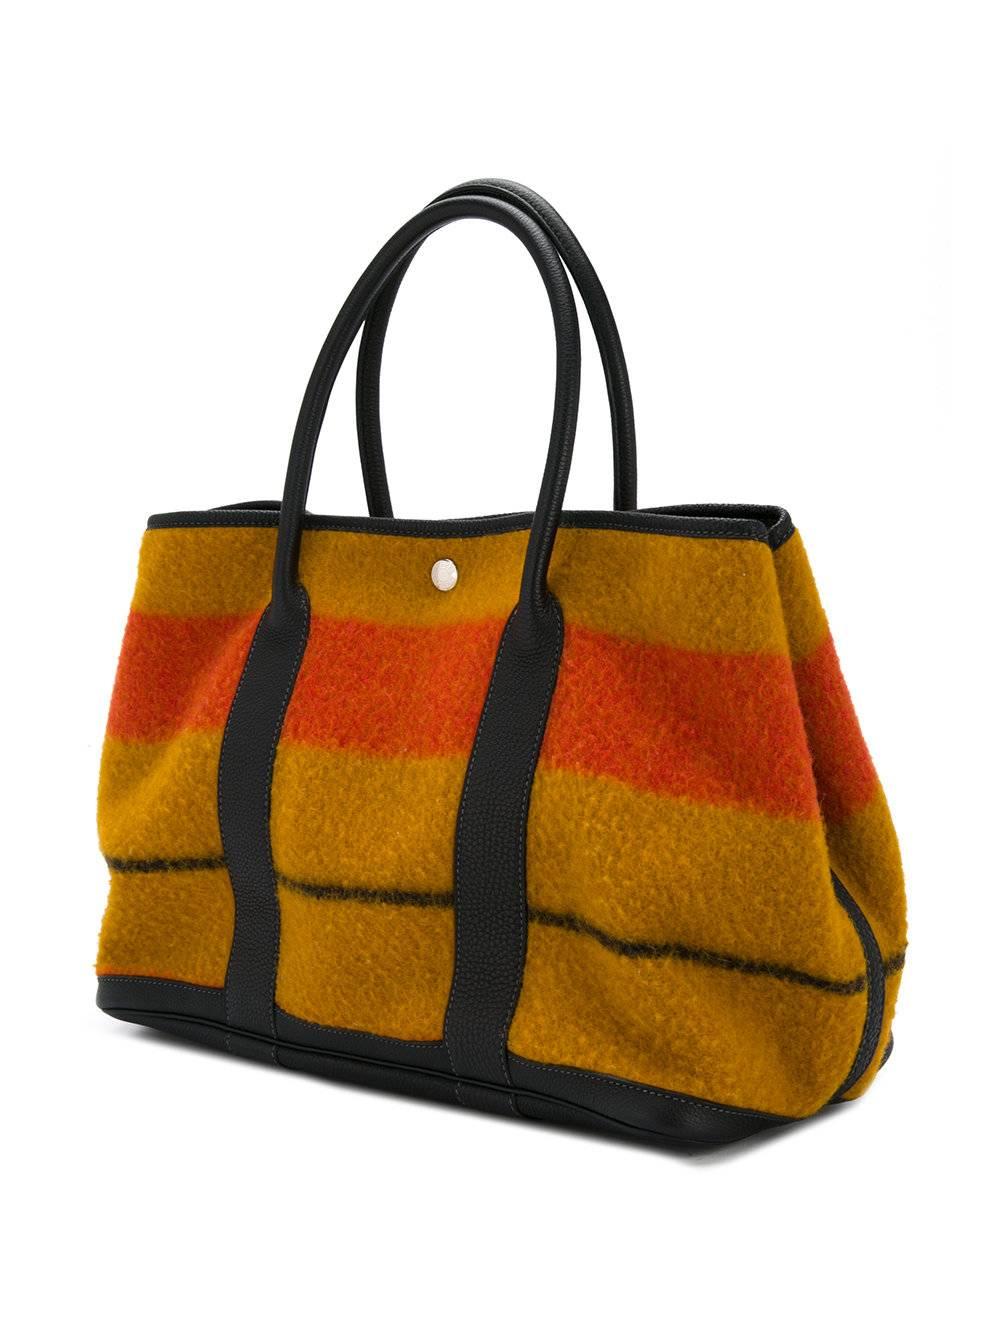 Brown Hermes Multi Color Stripe Wool Leather Men's Carryall Travel Top Handle Tote Bag